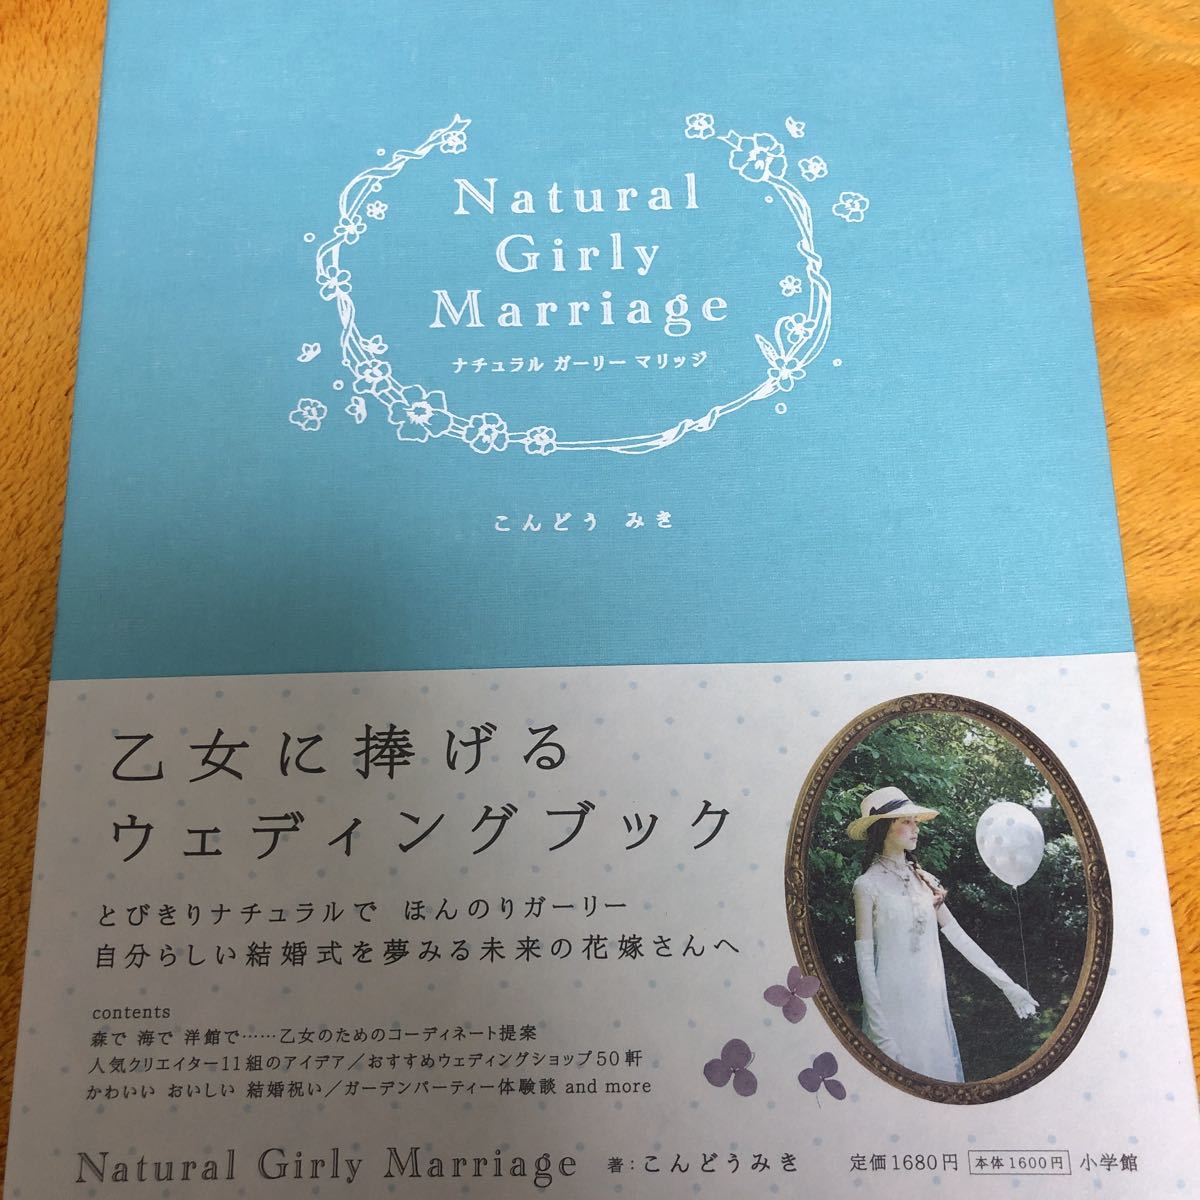 Natural Girly Marriage natural ga- Lee marriage *......* regular price 1680 jpy!